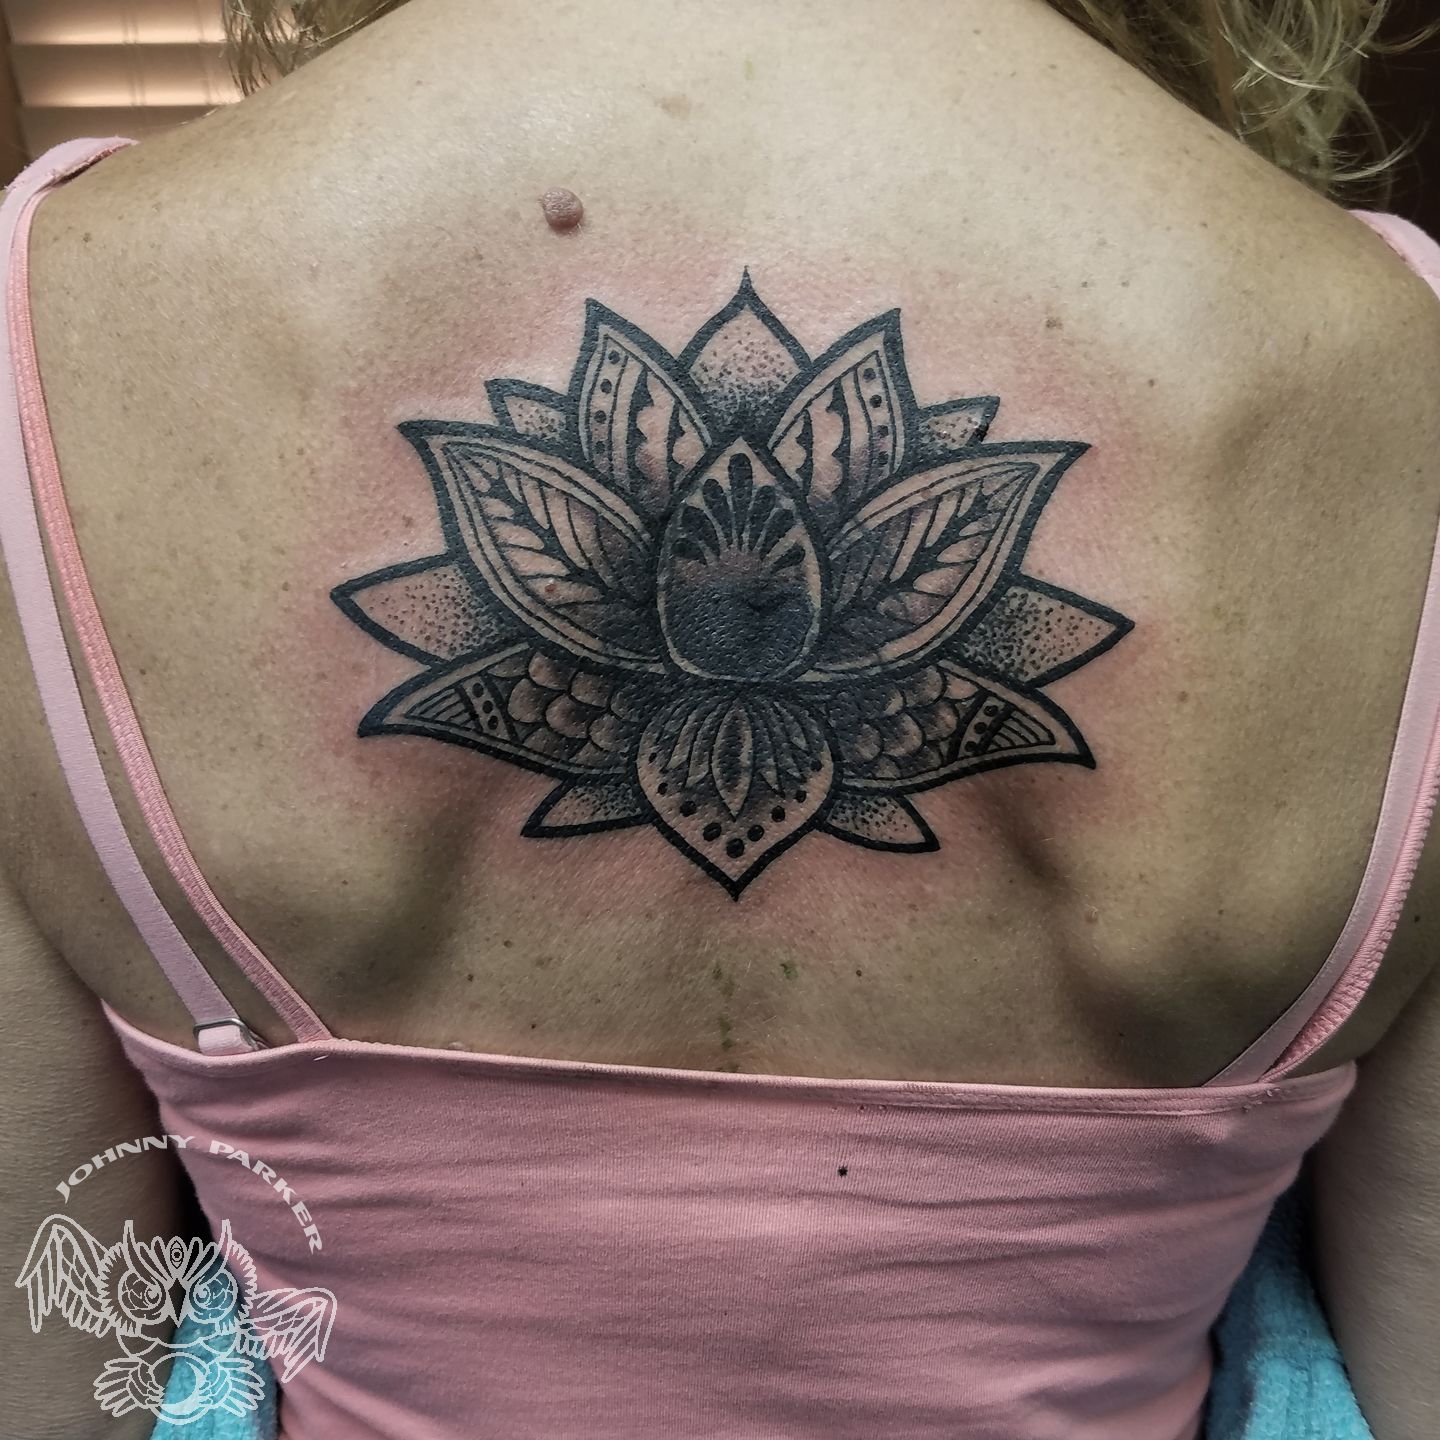 Lotus flower cover up tattooGabi TomescuExtreme tattoopiercing Fort  WilliamHighlandRealistic tatt  Cover up tattoo Cover up tattoos  Flower tattoo shoulder